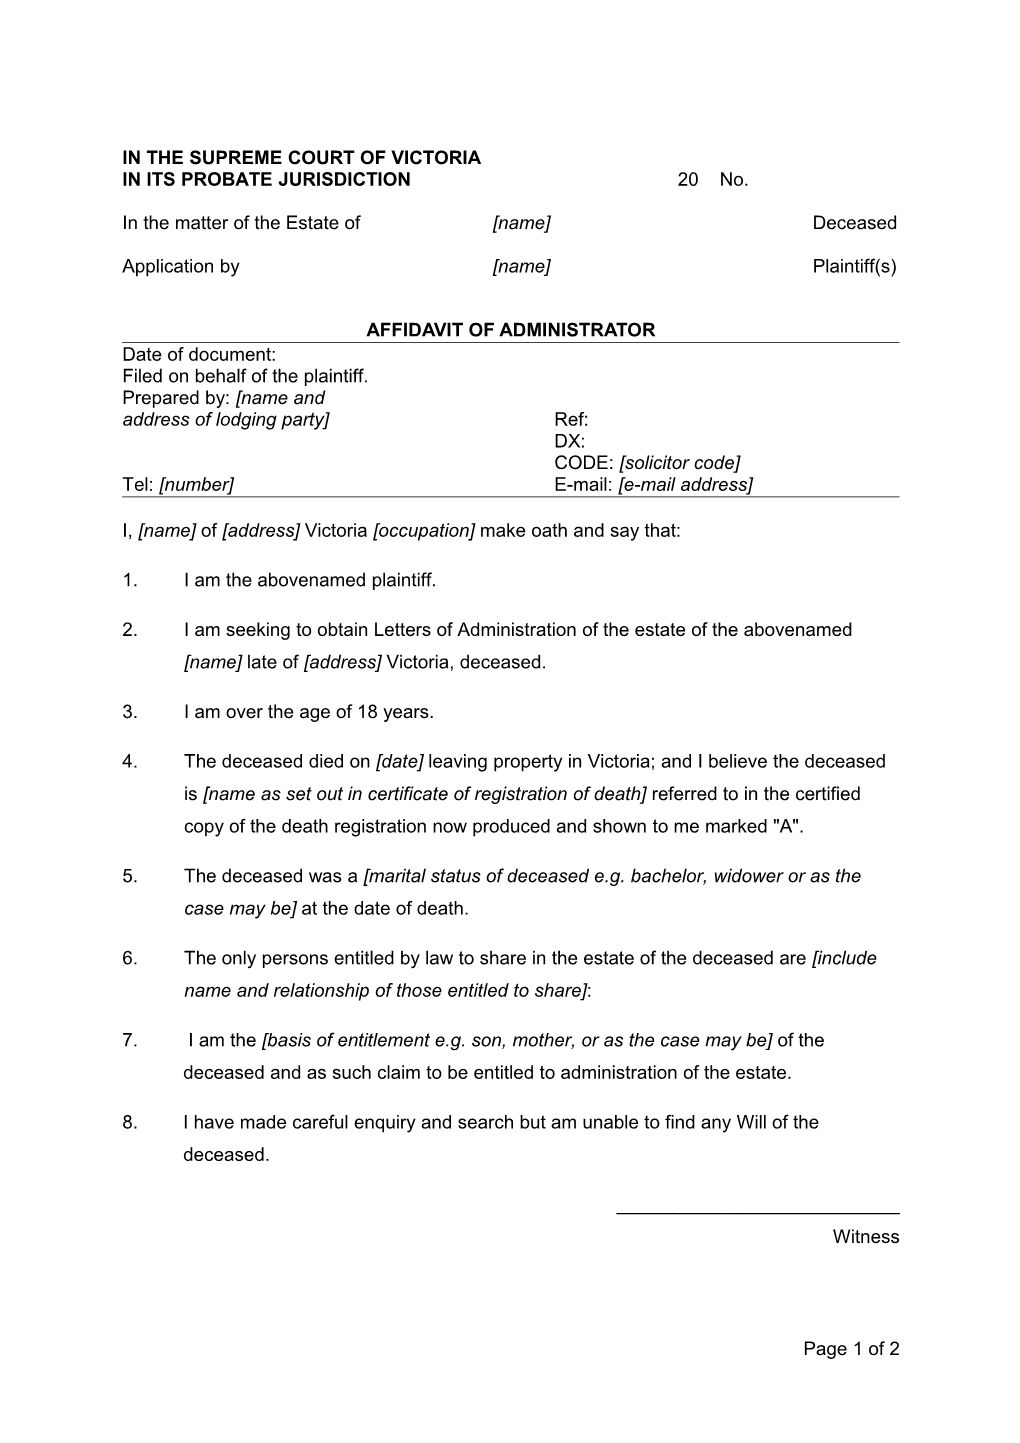 Affidavit of Administrator - Letters of Administration